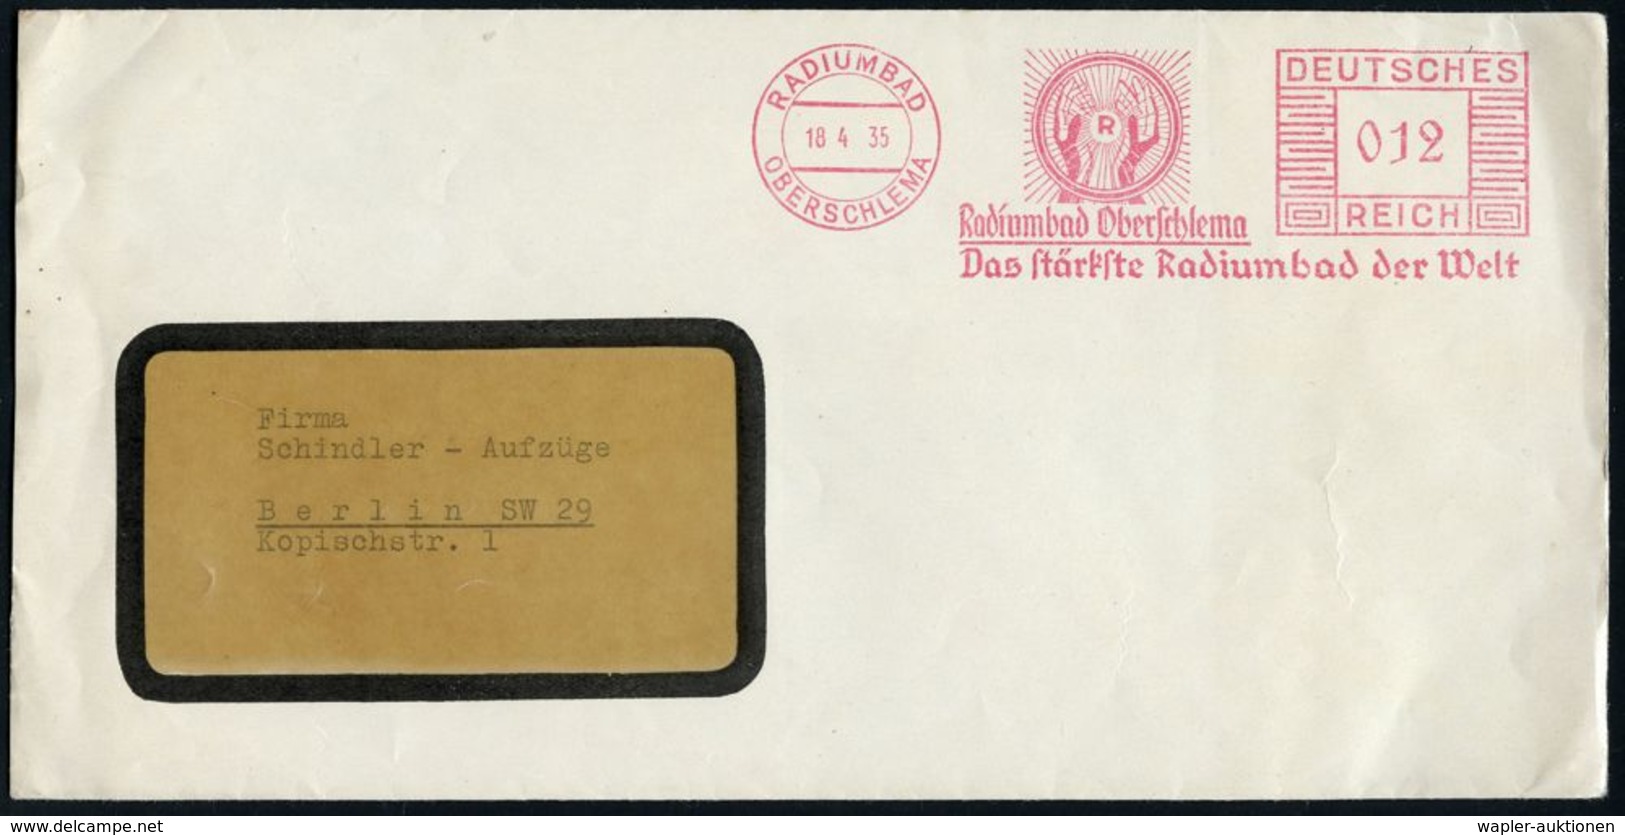 ATOM / KERNENERGIE / RÖNTGEN / RADIOAKTIVITÄT : OBERSCHLEMA RADIUMBAD/ Das Stärkste Radiumbad Der Welt 1935 (18.4.) Selt - Atome